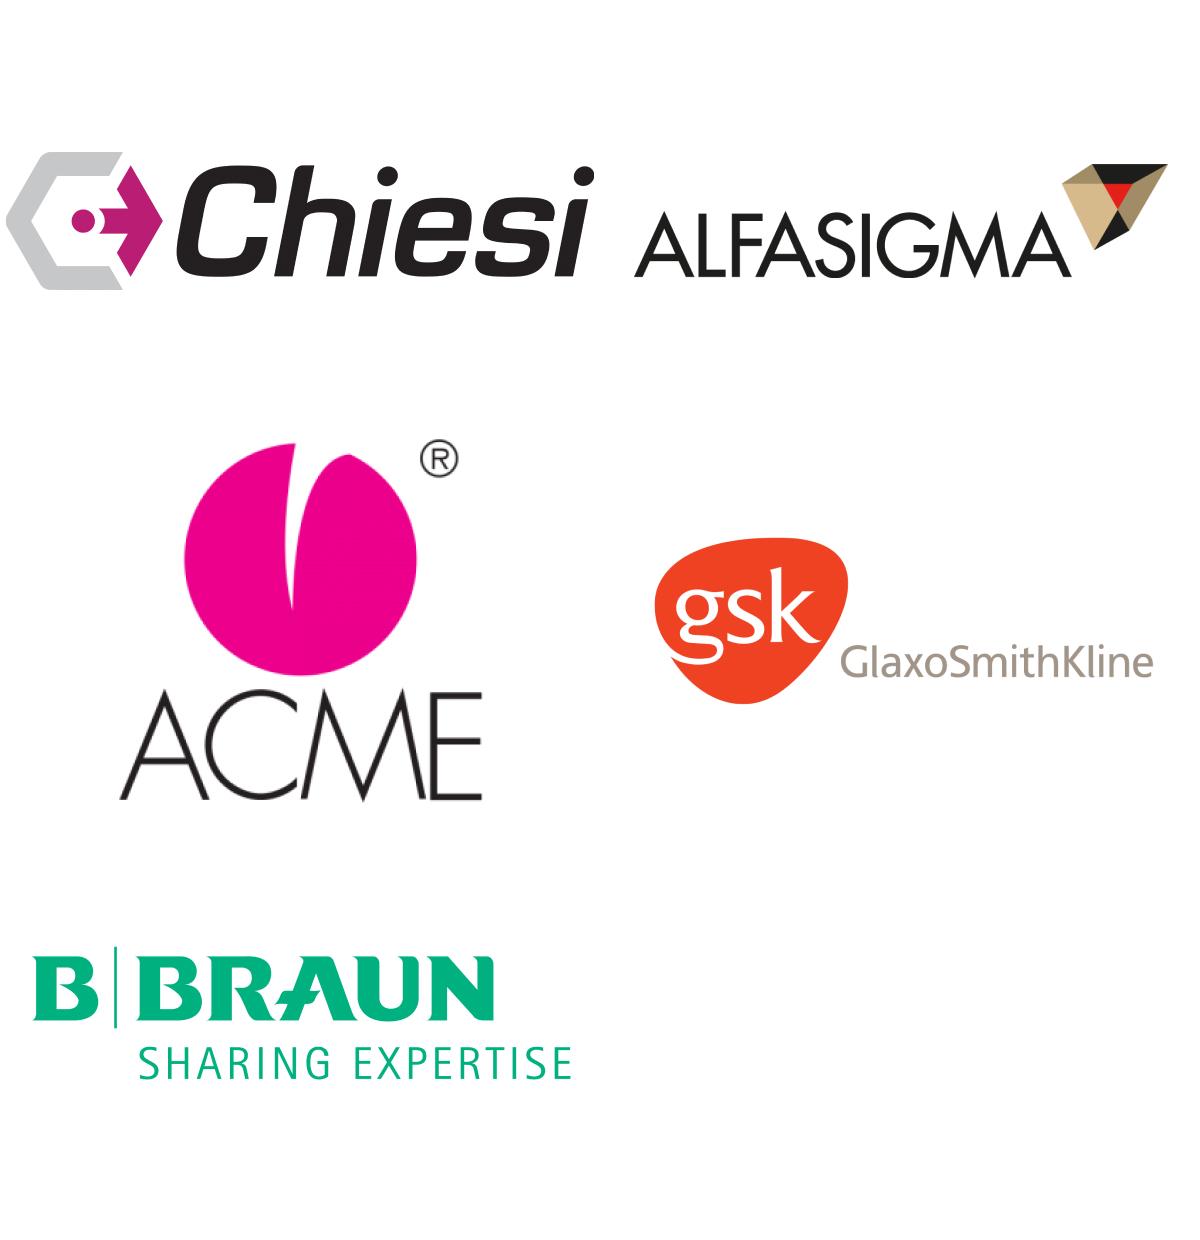 Immagini loghi top brand colonna pharma: Chiesi, Alfasigma, ACME, GlaxoSmithKline, B.Braun.